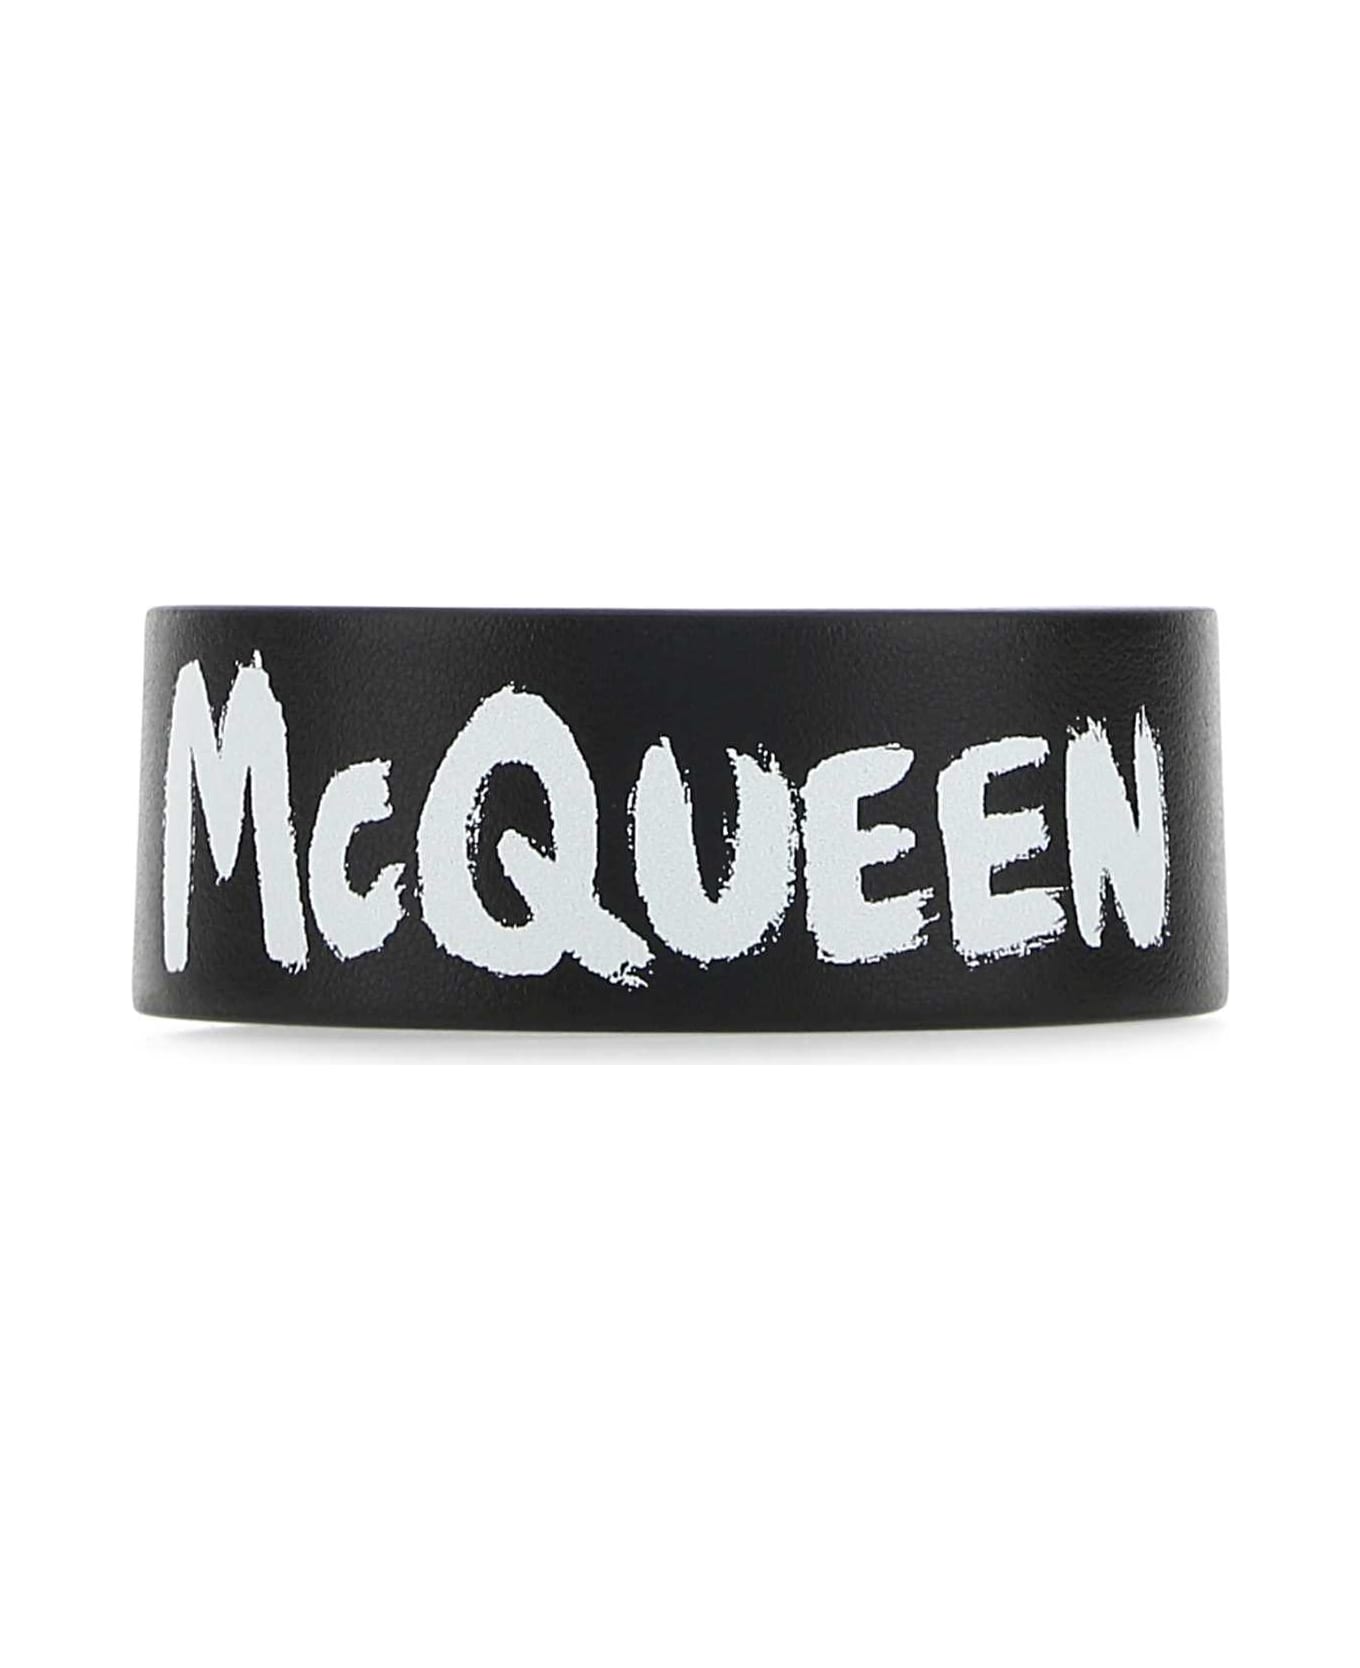 Alexander McQueen Black Leather Bracelet - 1070